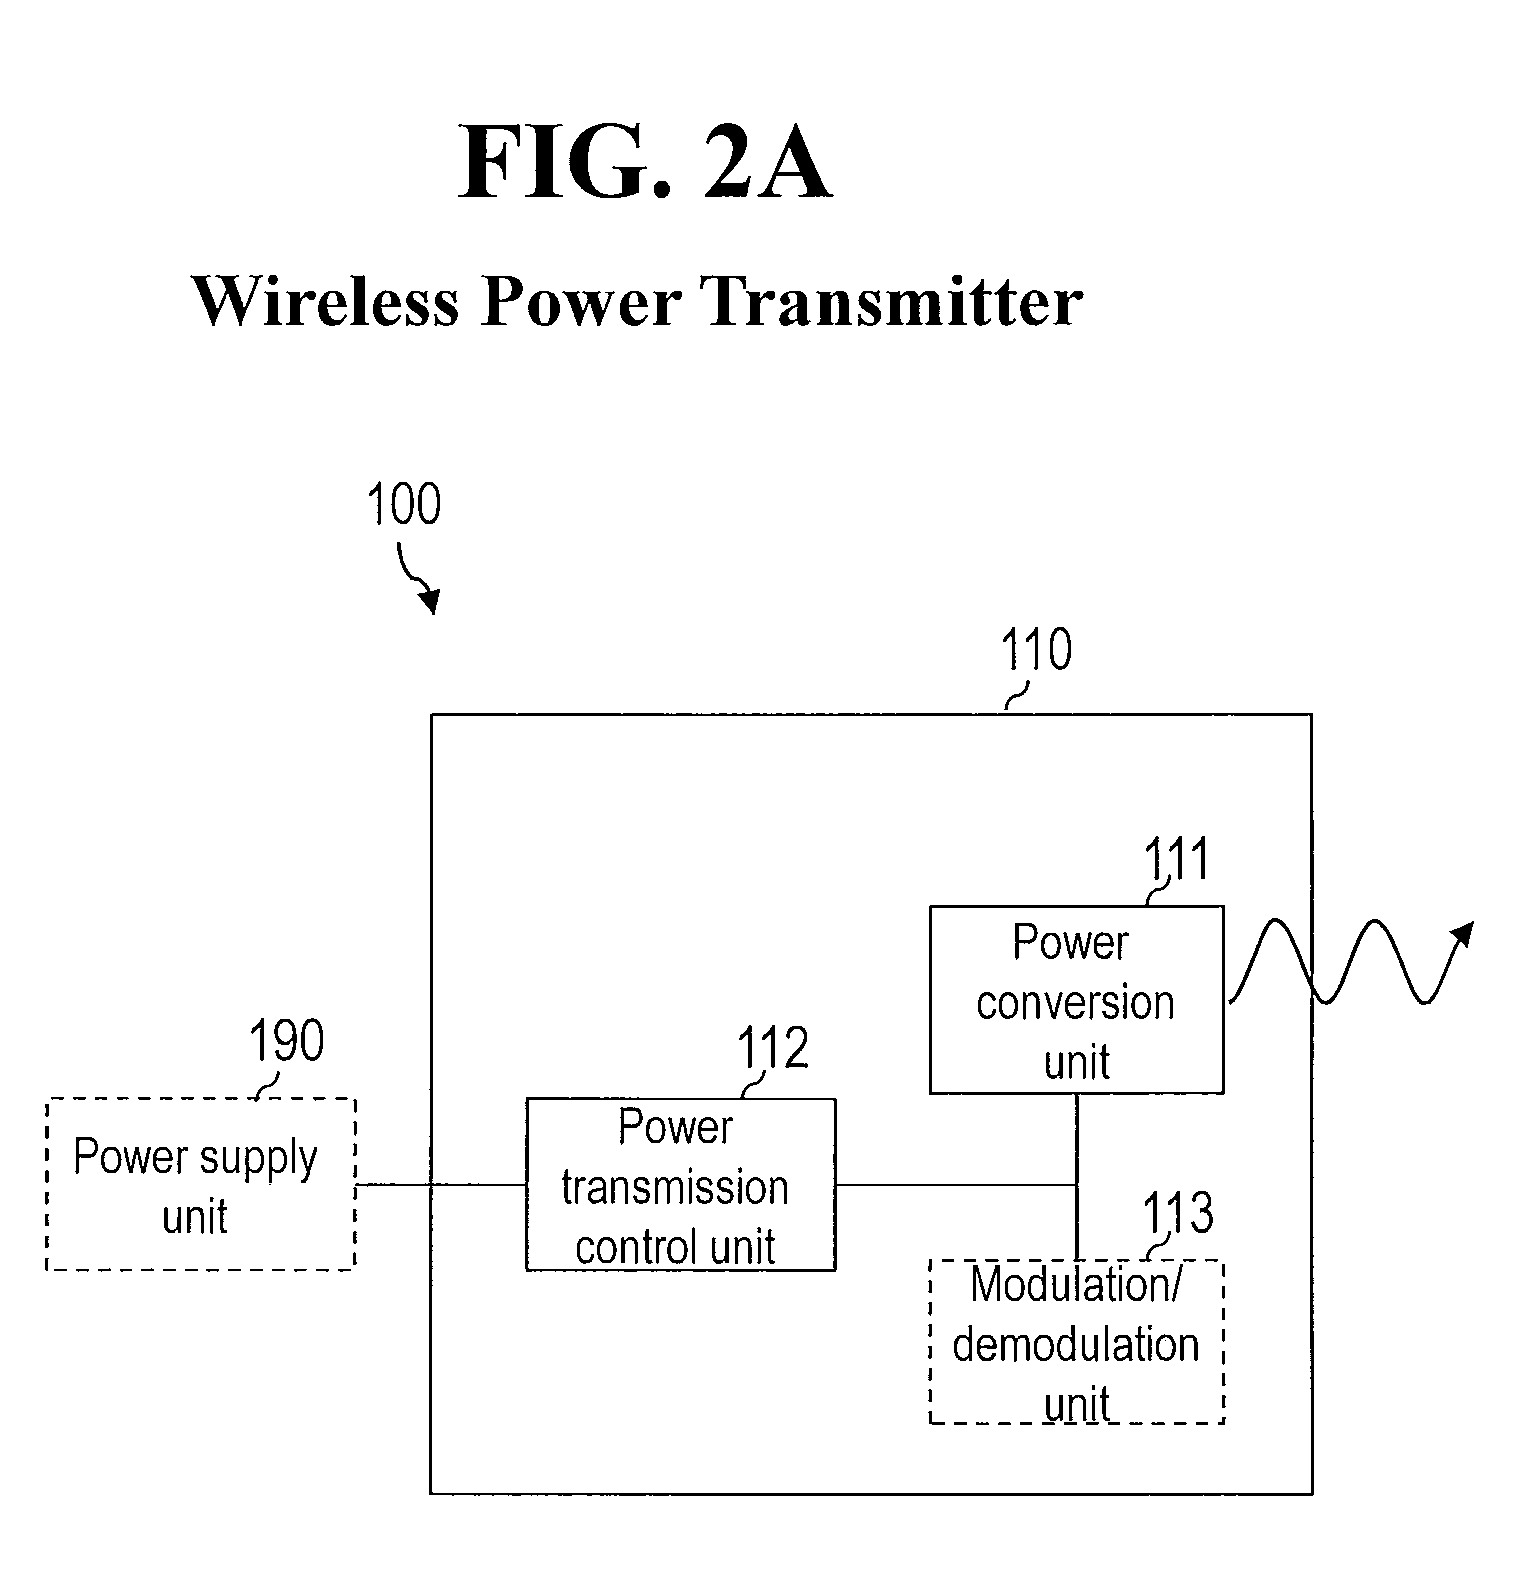 Two-way communication in wireless power transfer